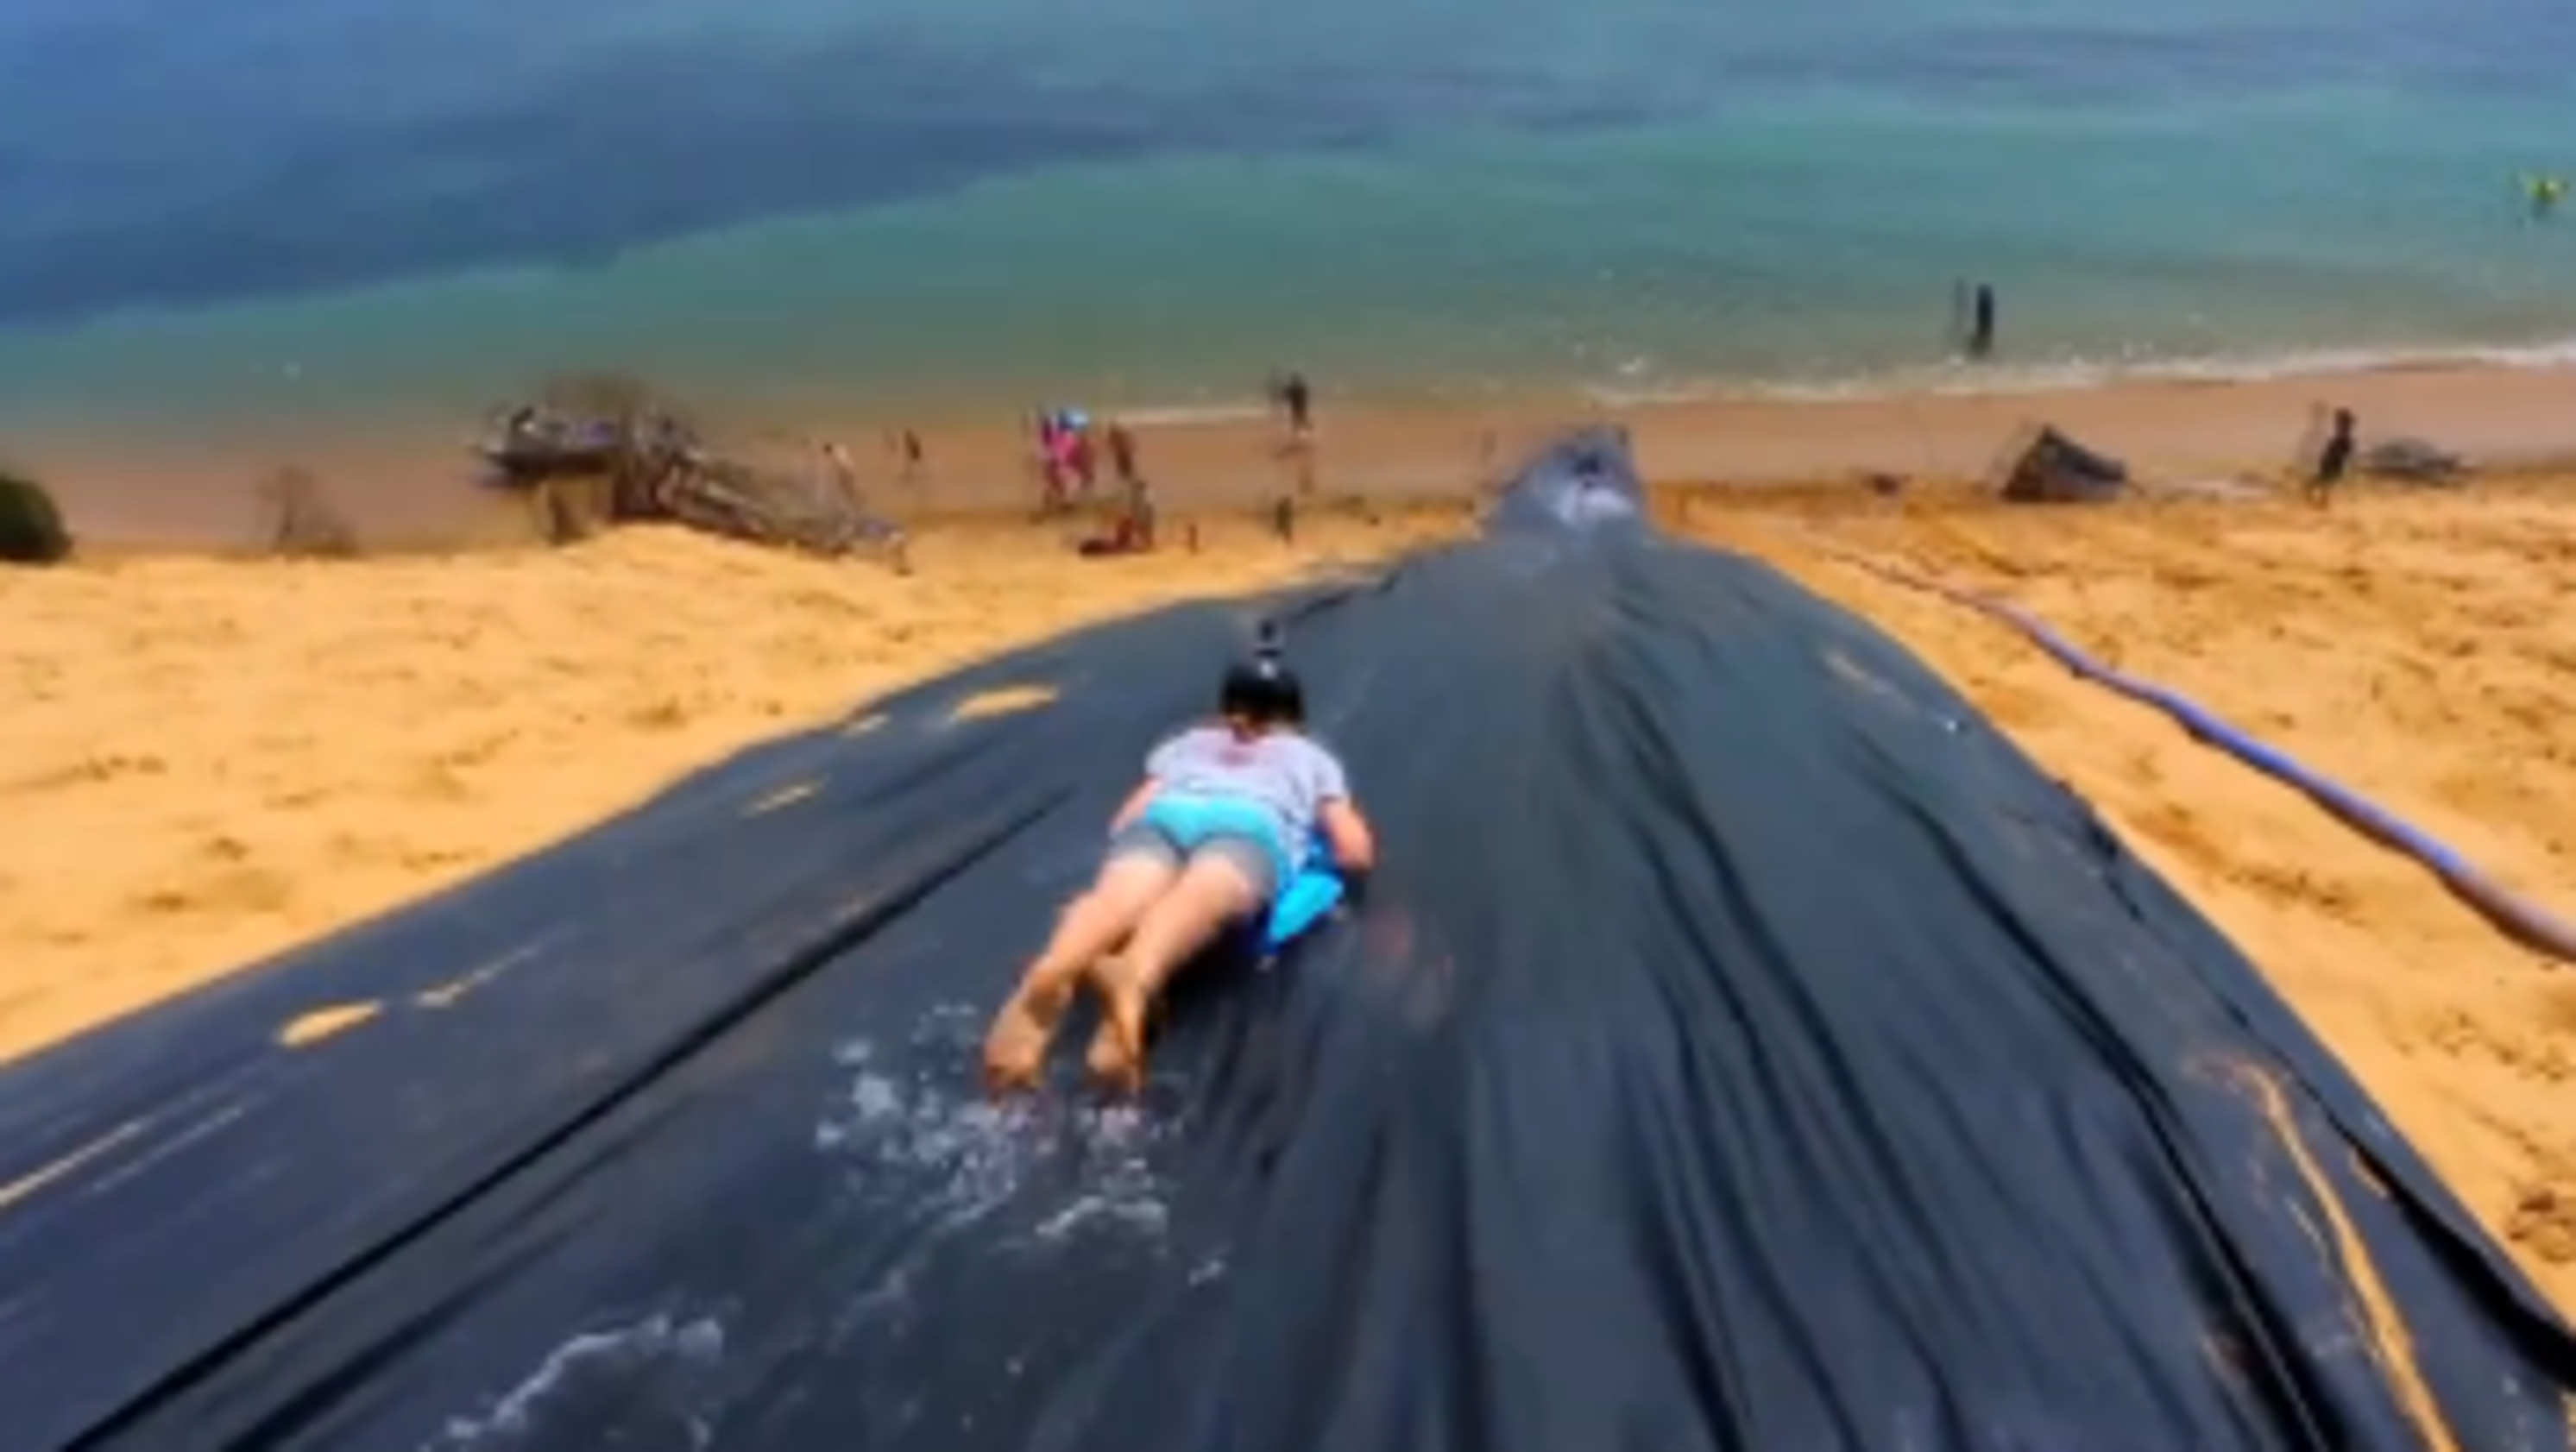 Watch Homemade Slipn Slide Launch Riders Into Air